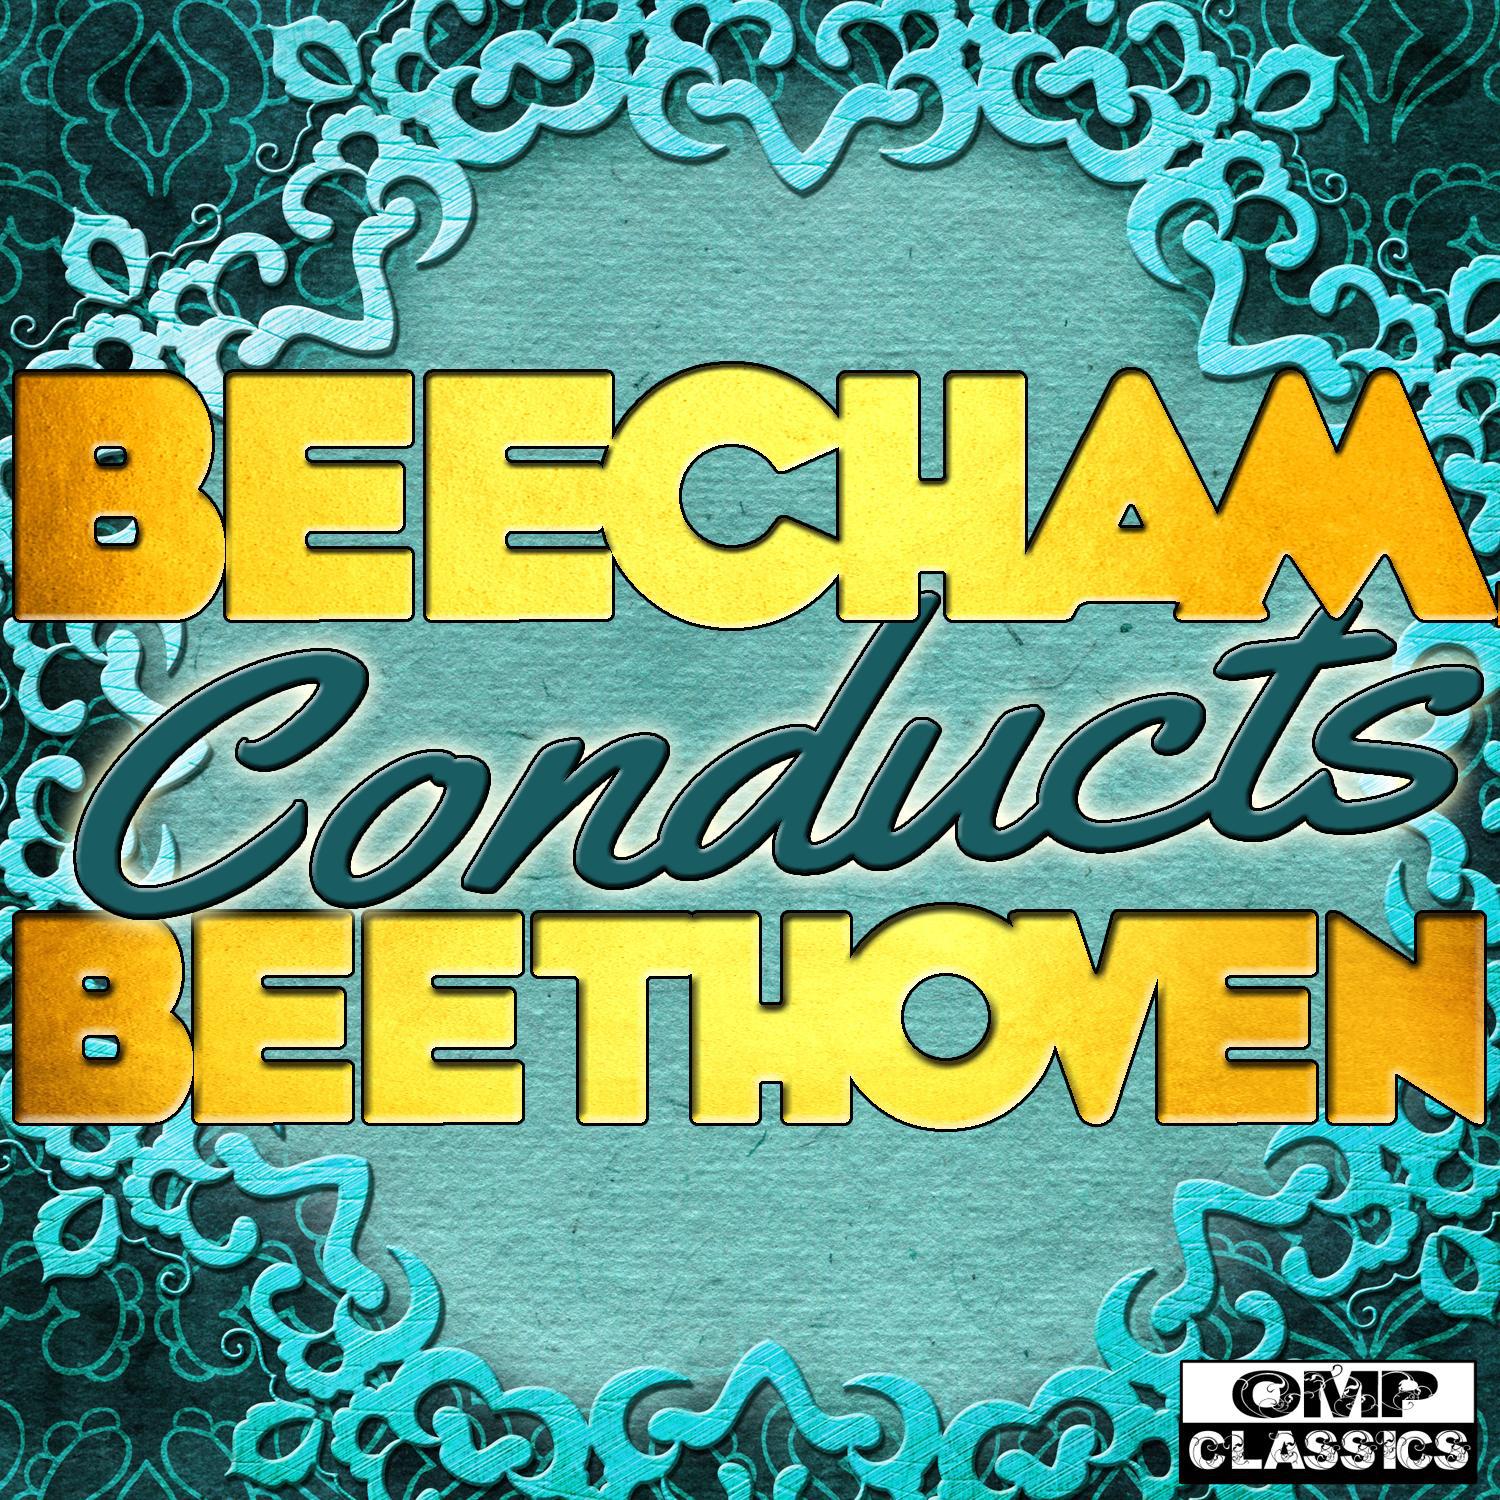 Beecham Conducts: Beethoven